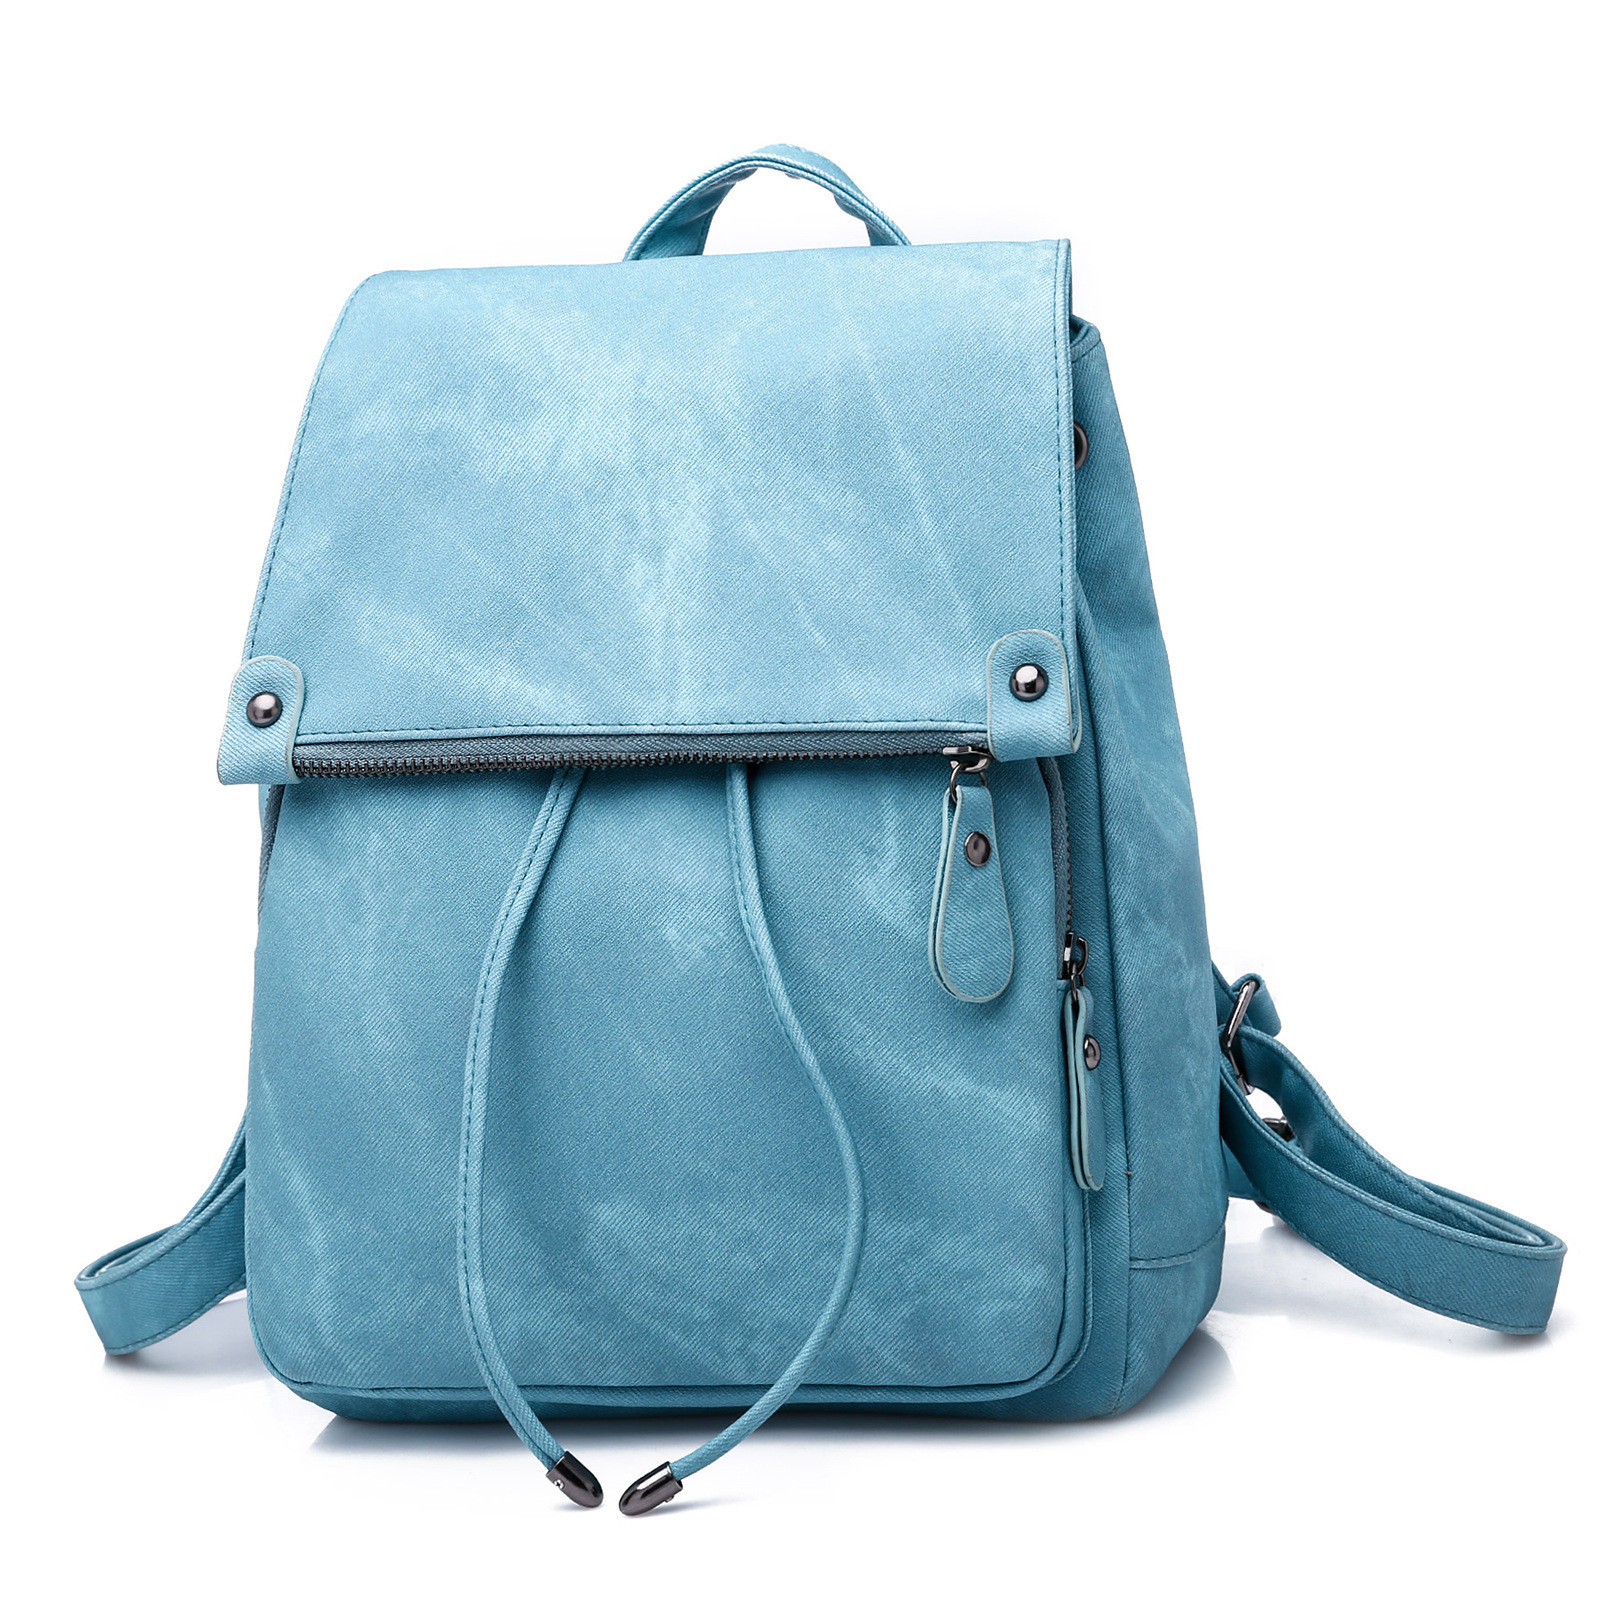 Рюкзак женский M2224-26 голубой, 30х25х16 см